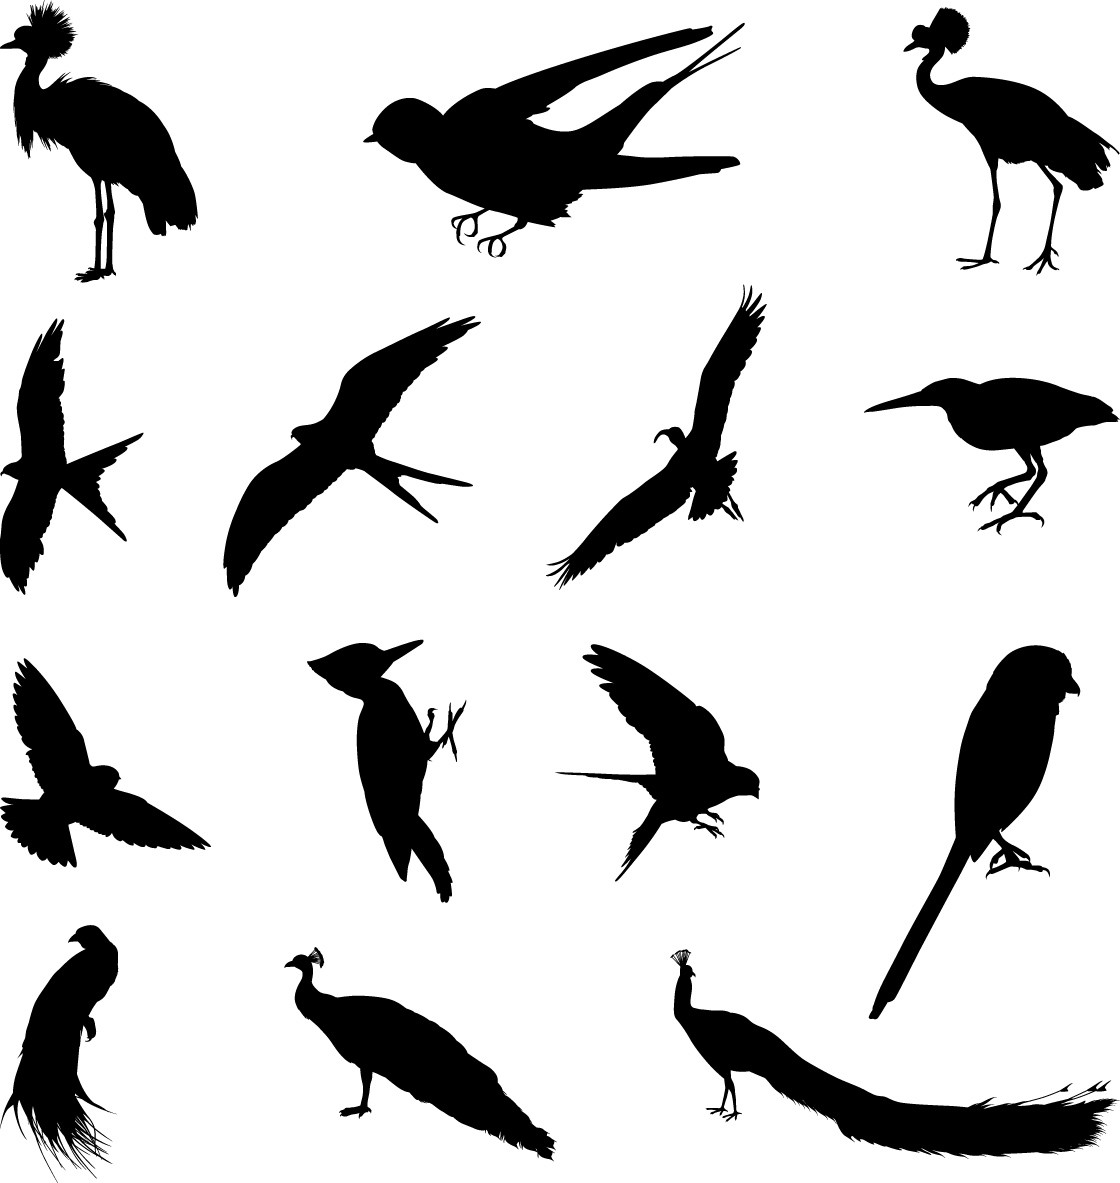 Various birds silhouettes set